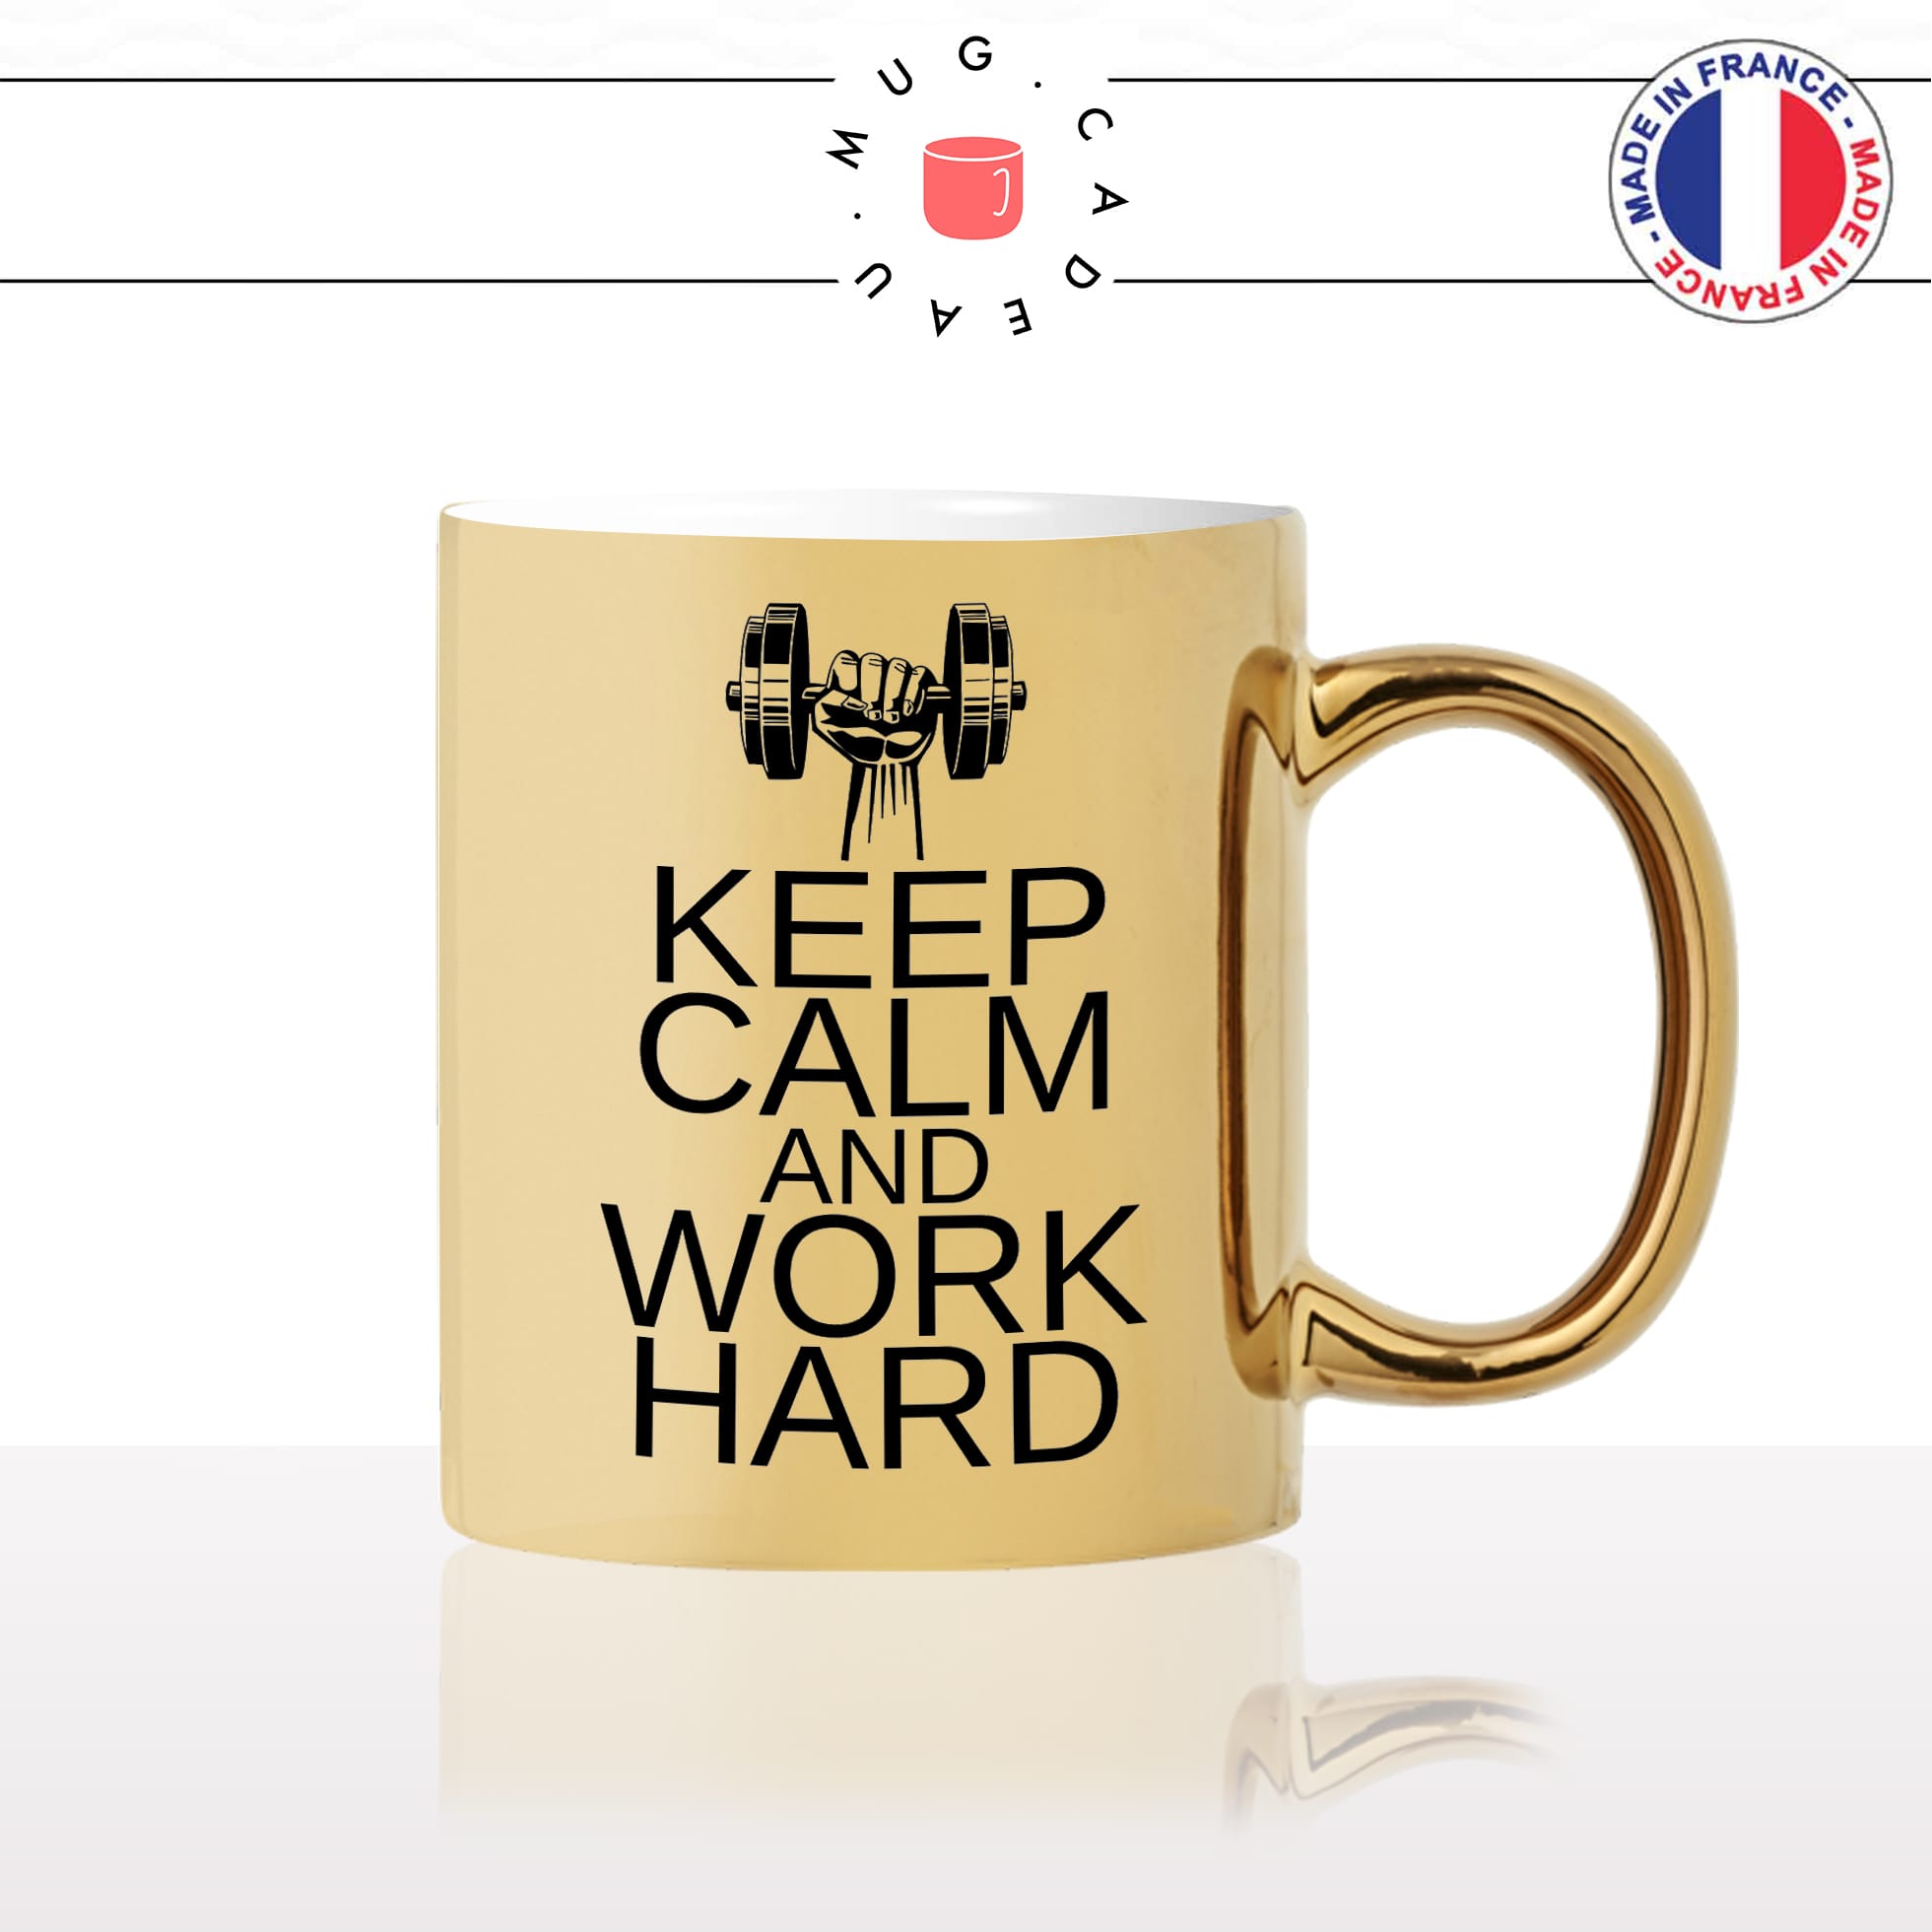 mug-tasse-gold-doré-or-keep-calm-and-work-hard-musculation-motivation-sportif-sport-homme-idée-cadeau-fun-original-personnalisé-café-thé2-min